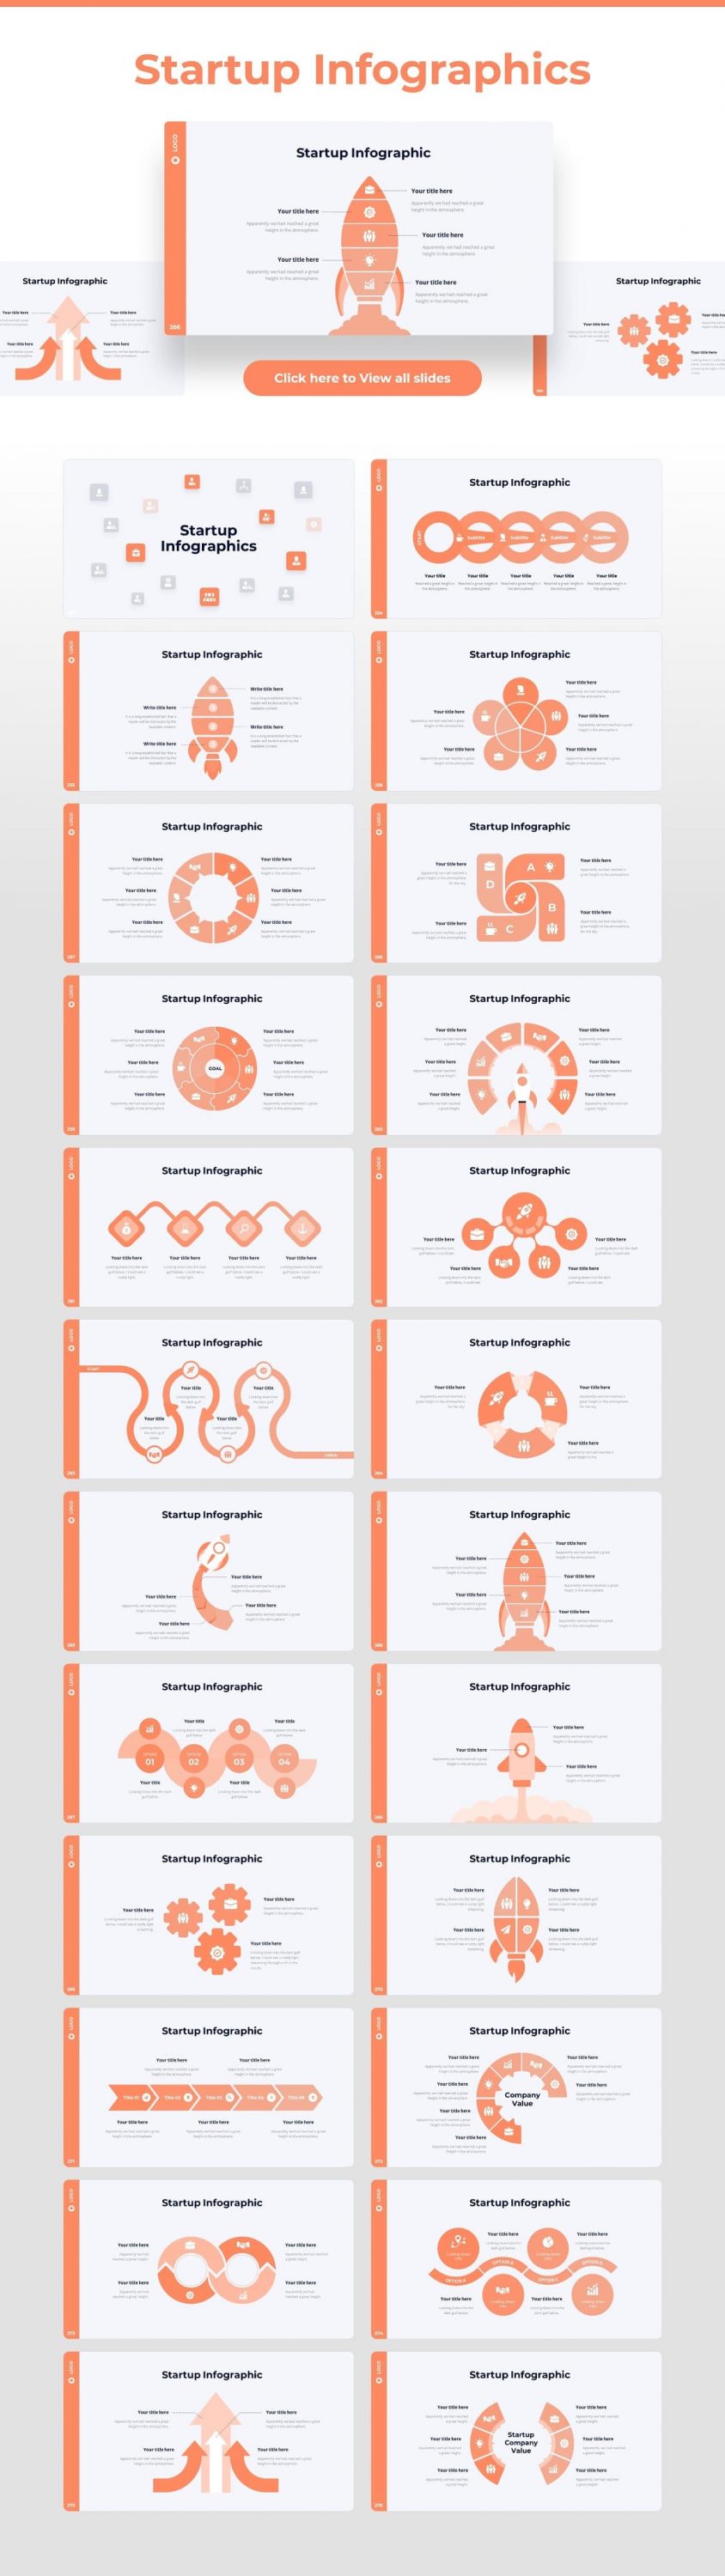 Startup infographic Light Theme Pitch Deck & Presentation V3.0.